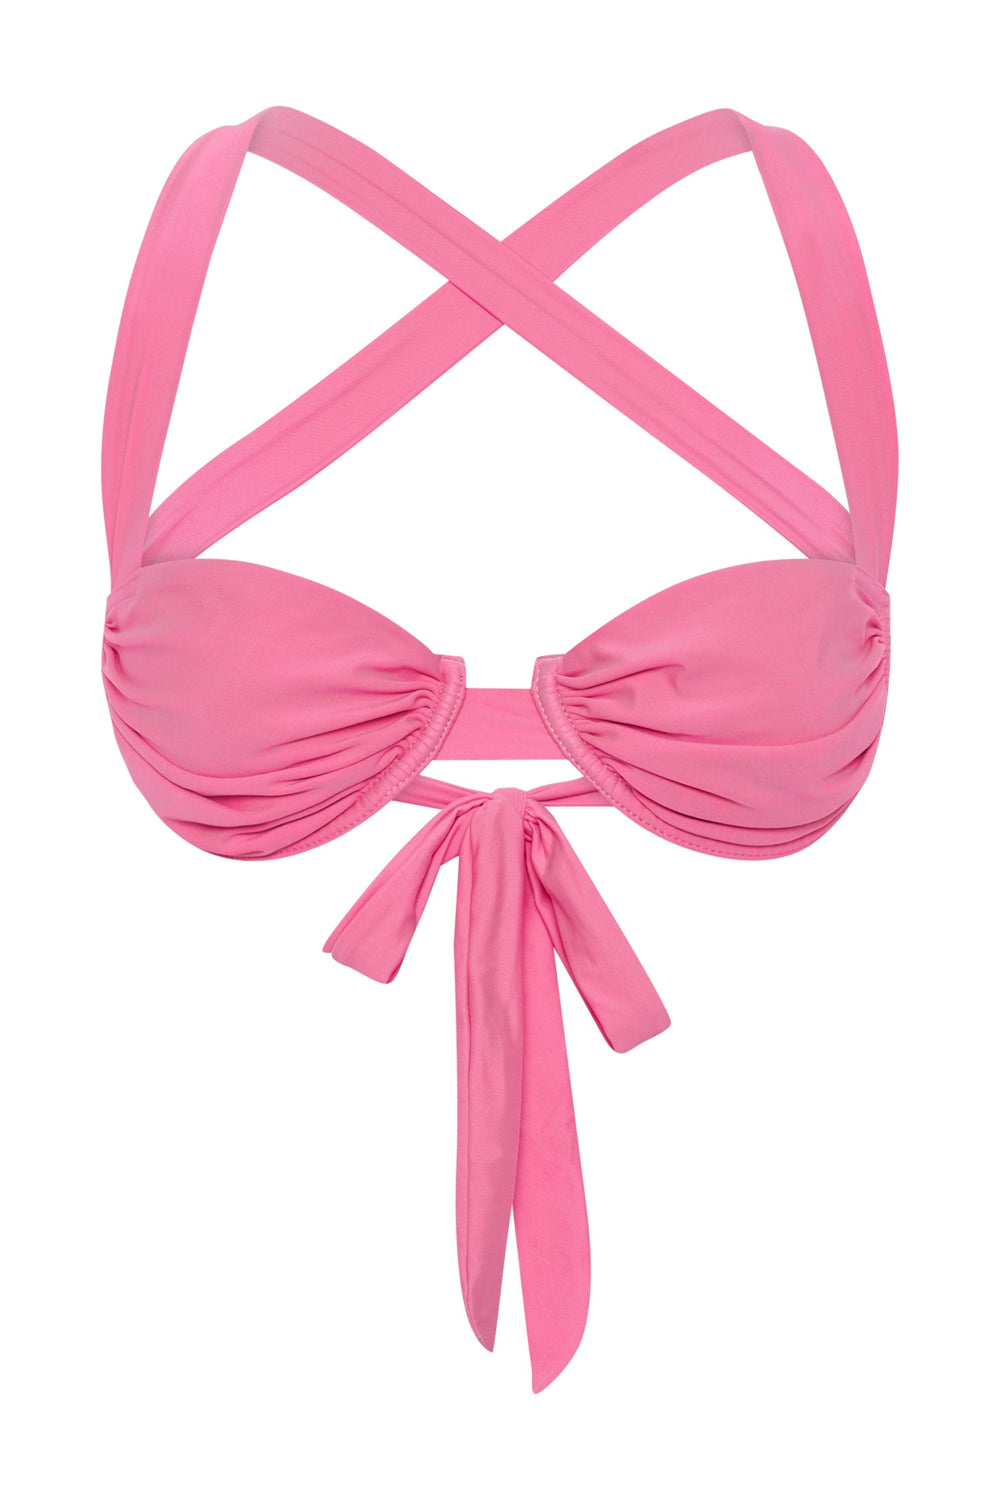 Kai Recycled Nylon Ruched Underwire Bikini Top - Pink